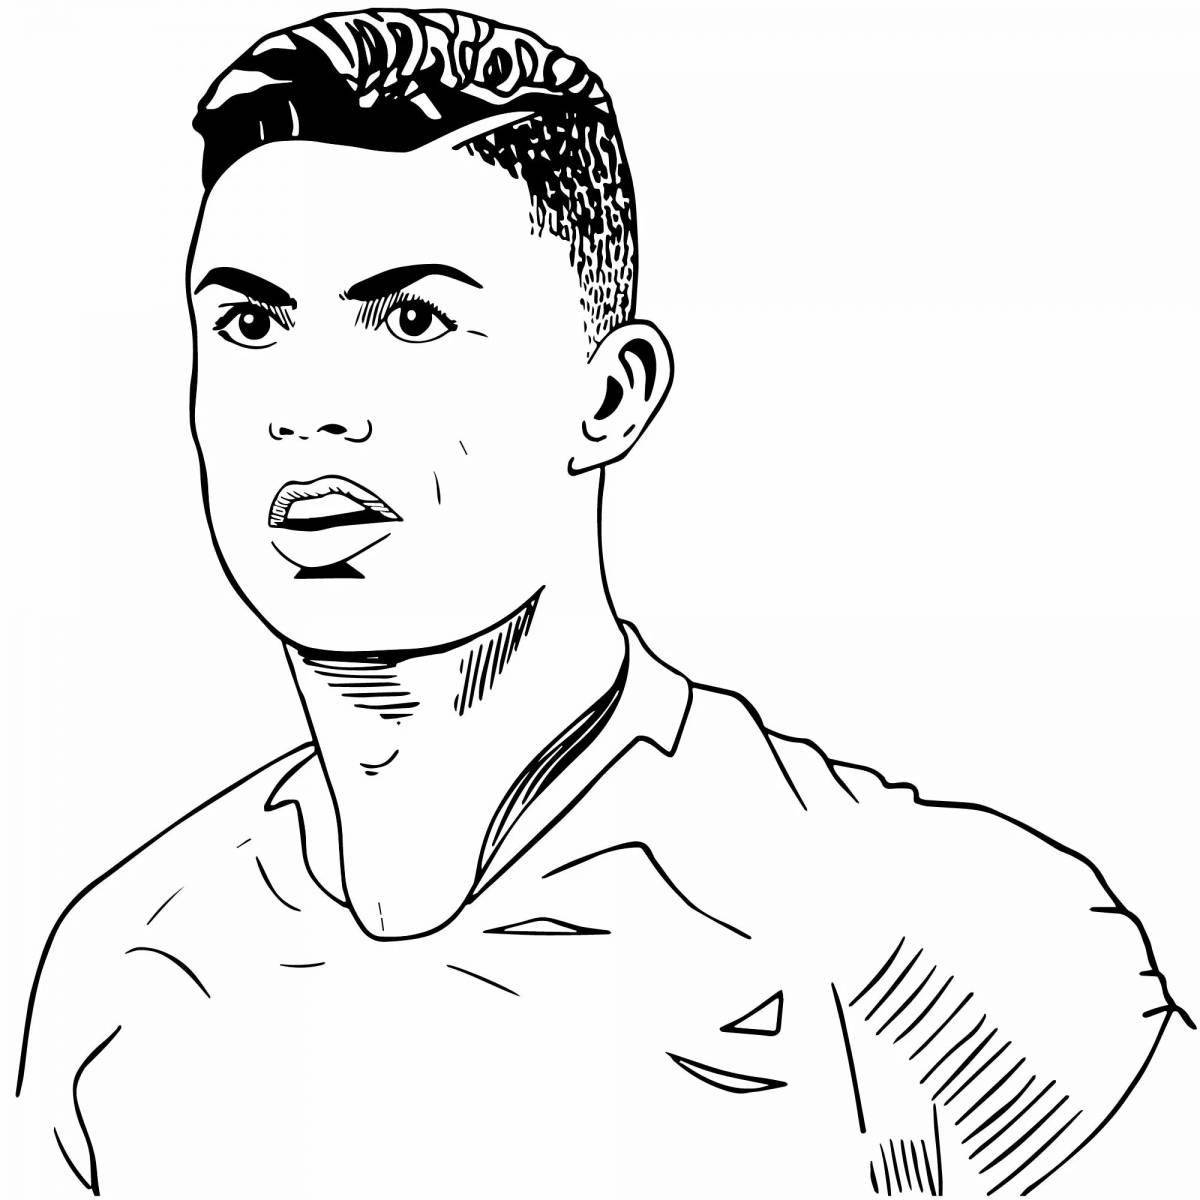 Football coloring page with ronaldo kick